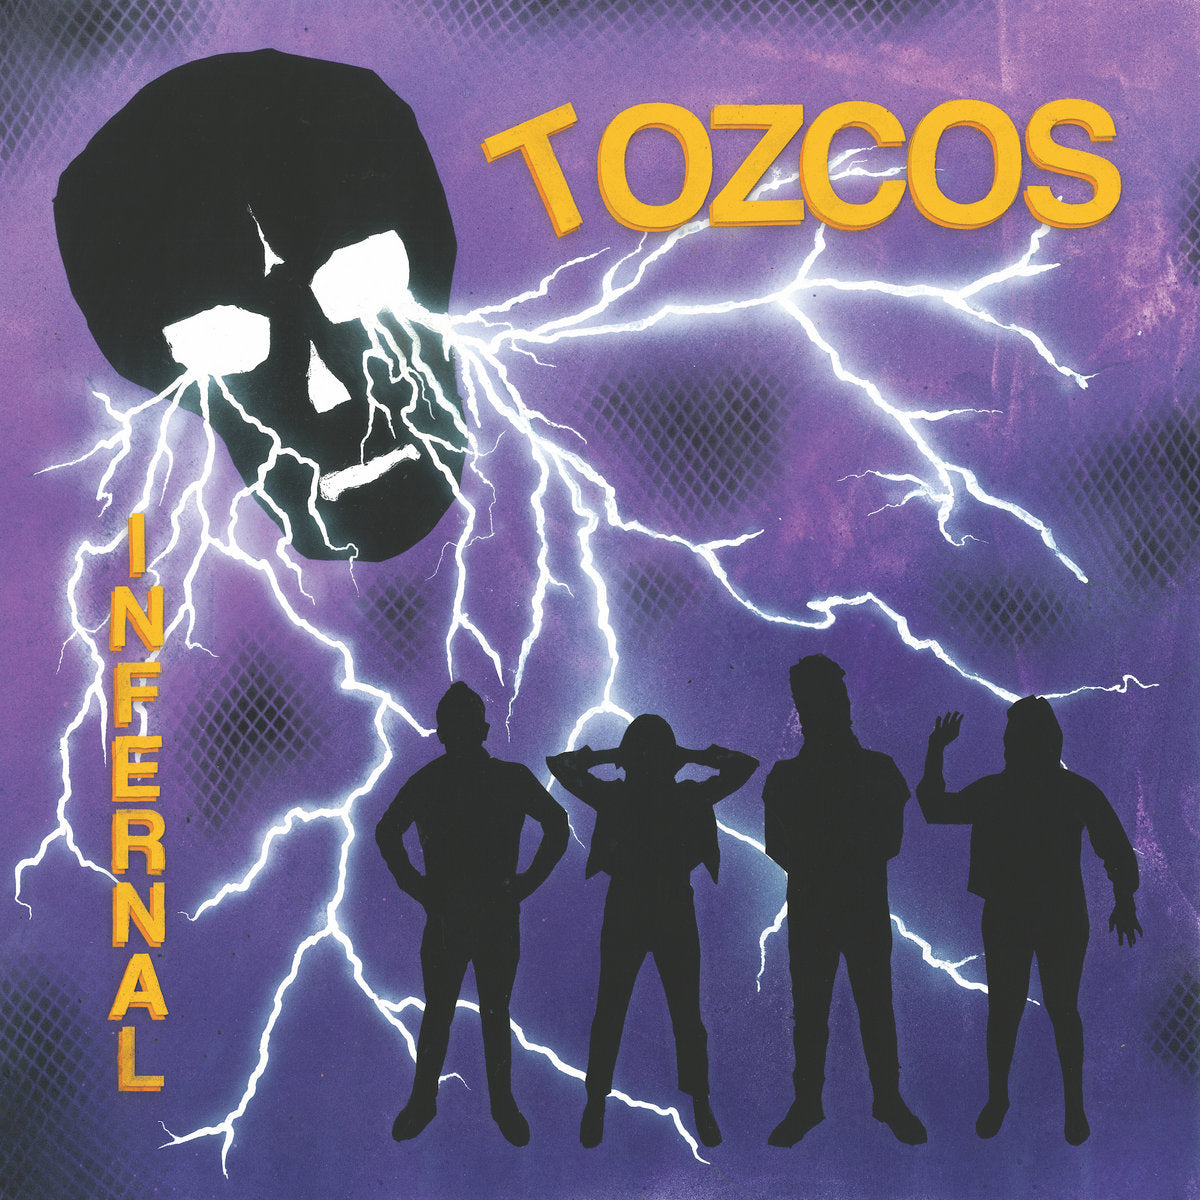 TOZCOS "Infernal" LP